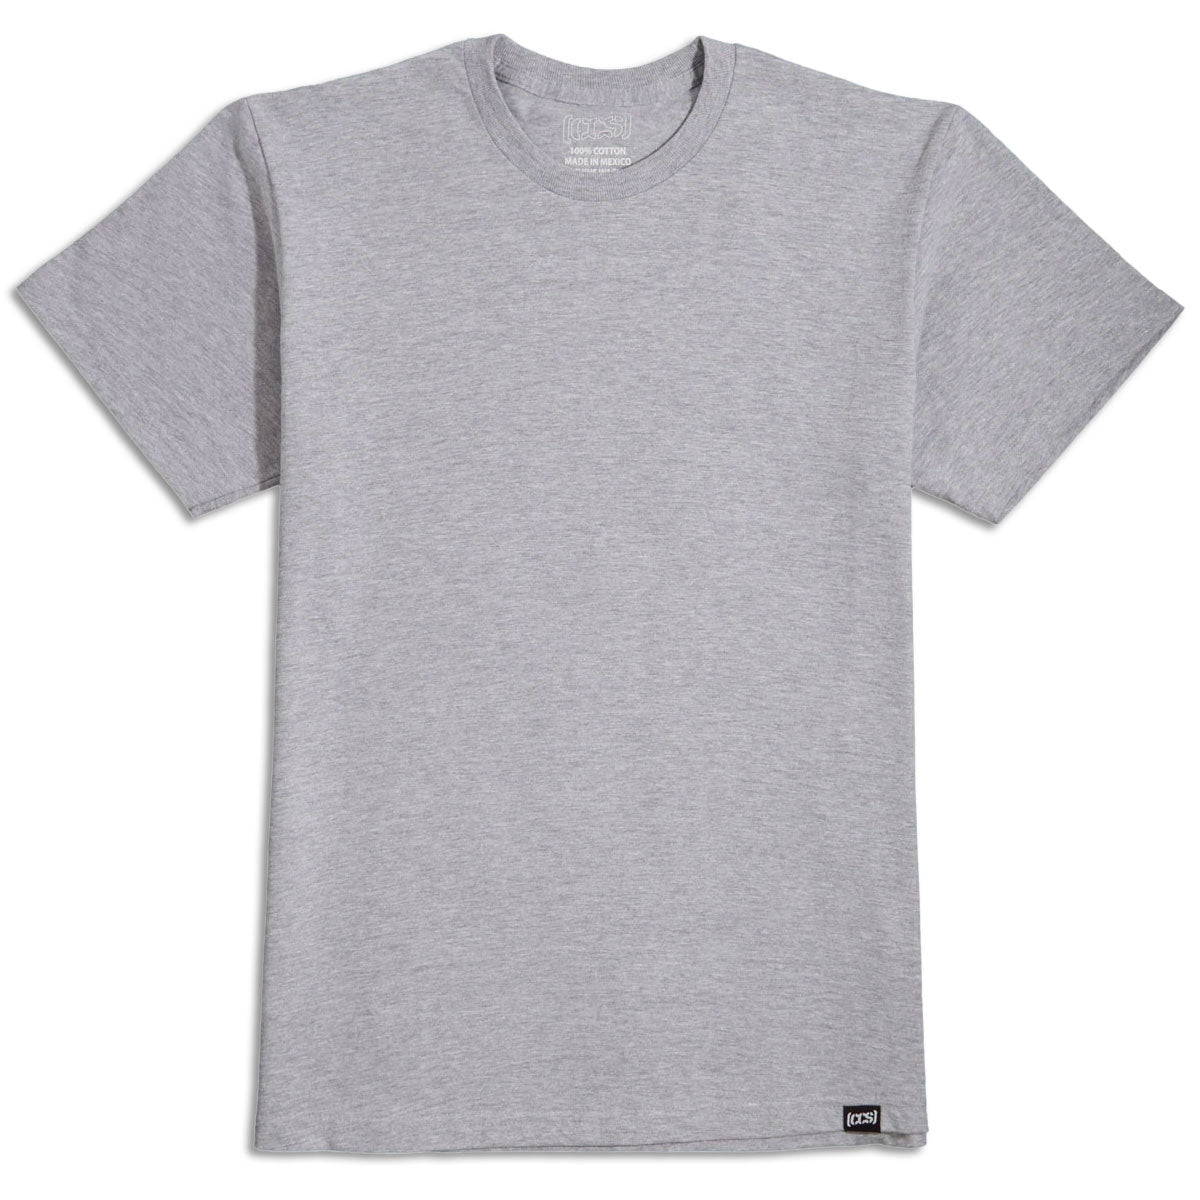 CCS Original Heavyweight T-Shirt - Grey